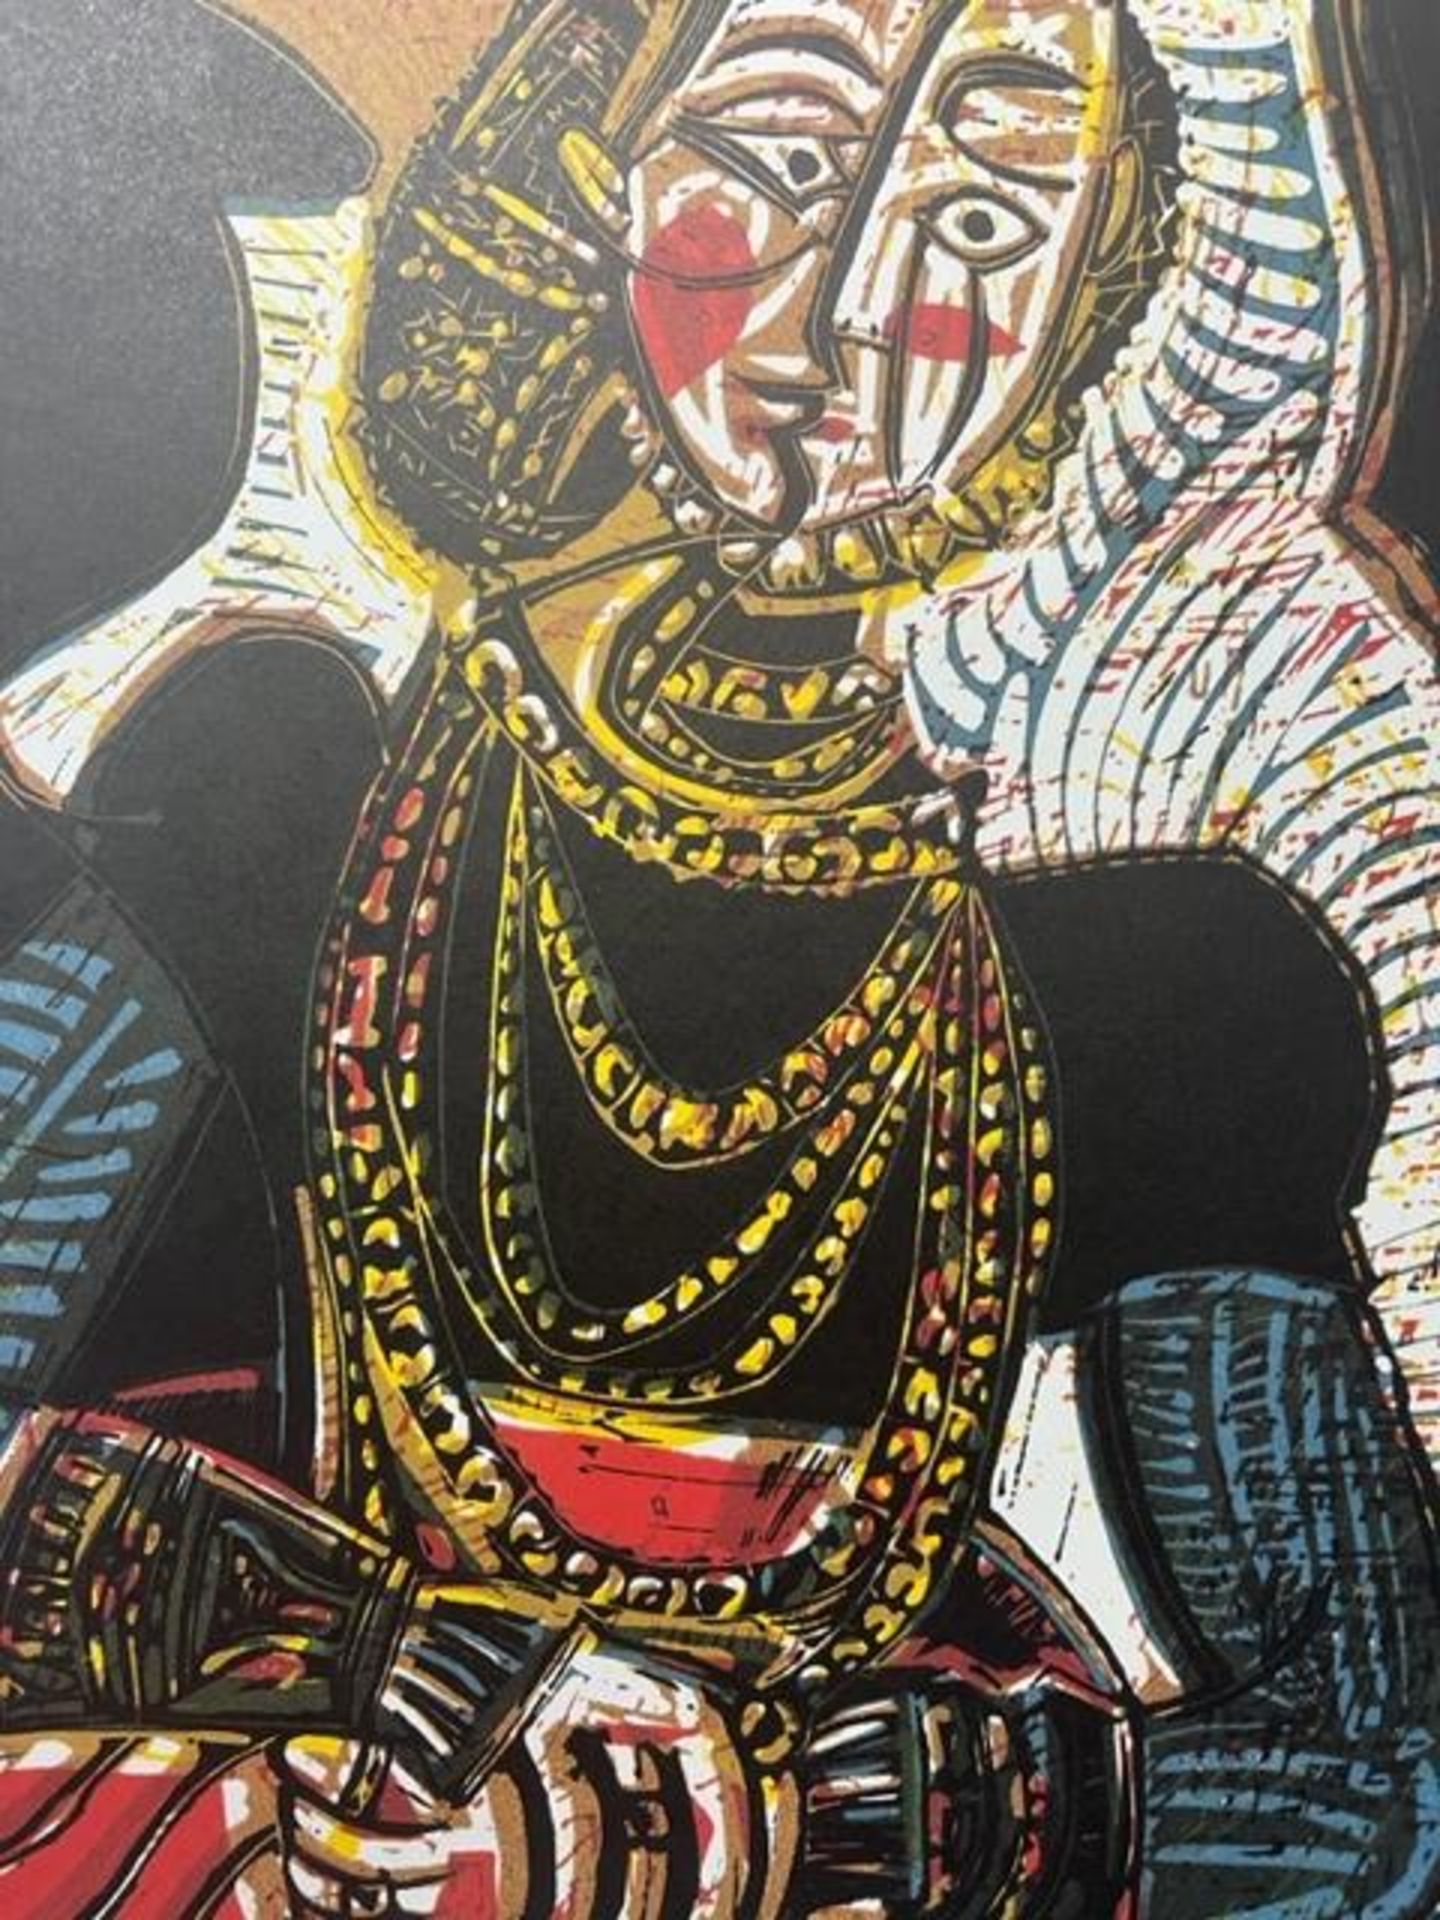 Pablo Picasso "Portrait of a Lady" Print. - Image 6 of 6